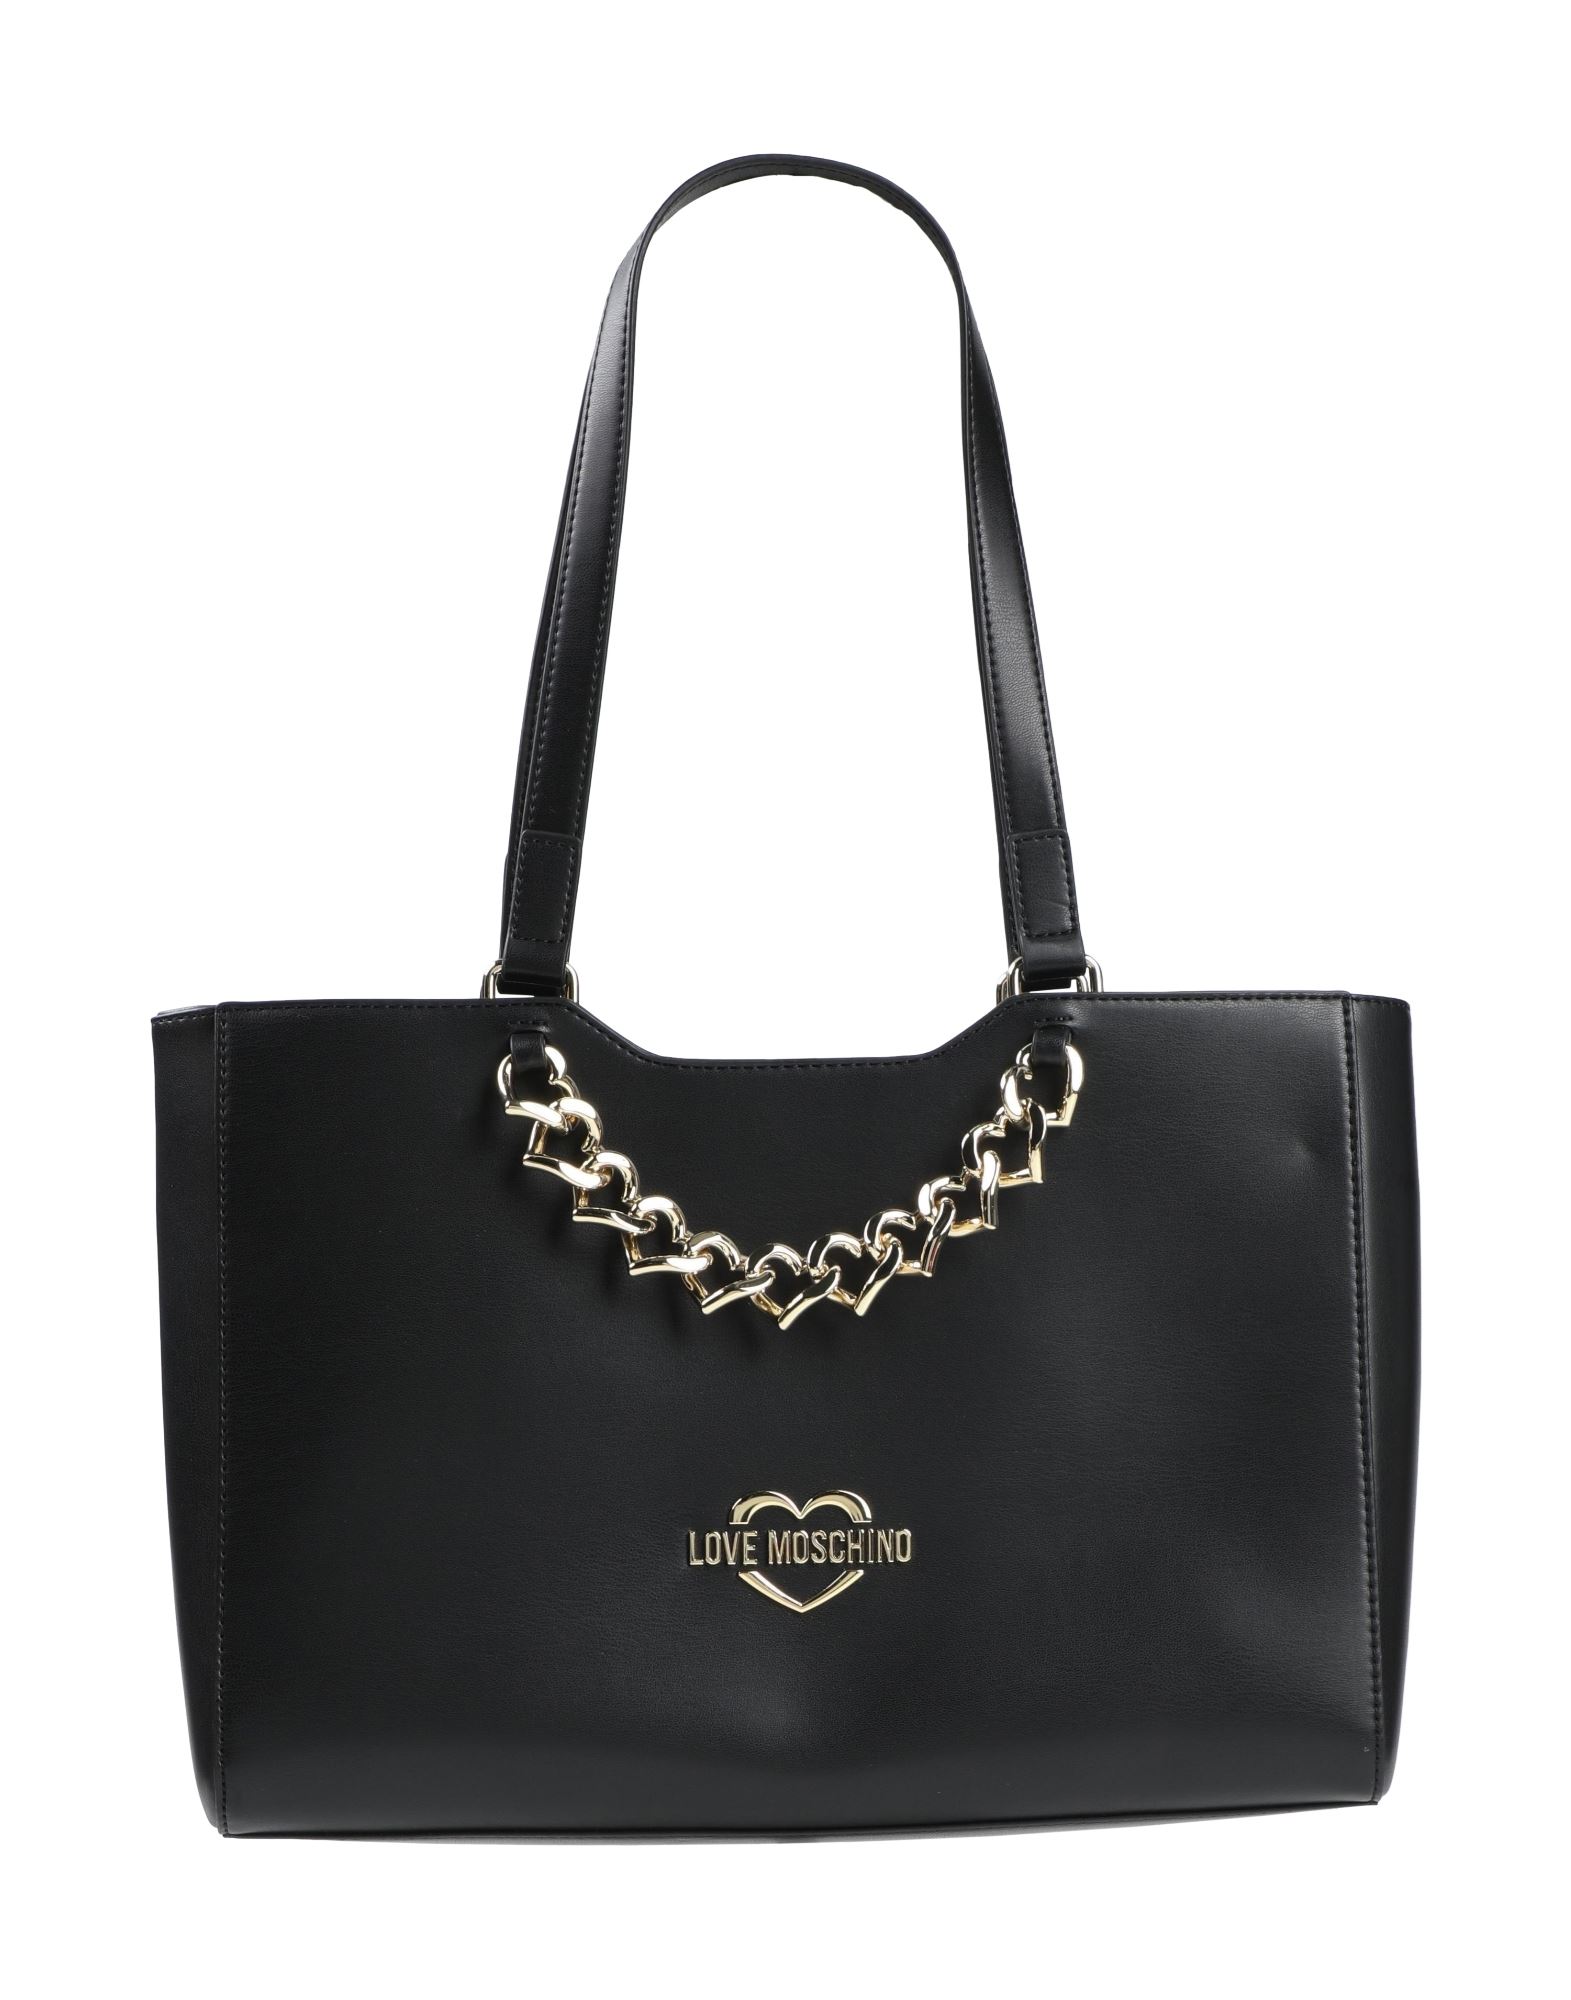 LOVE MOSCHINO Handbags - Item 45552877